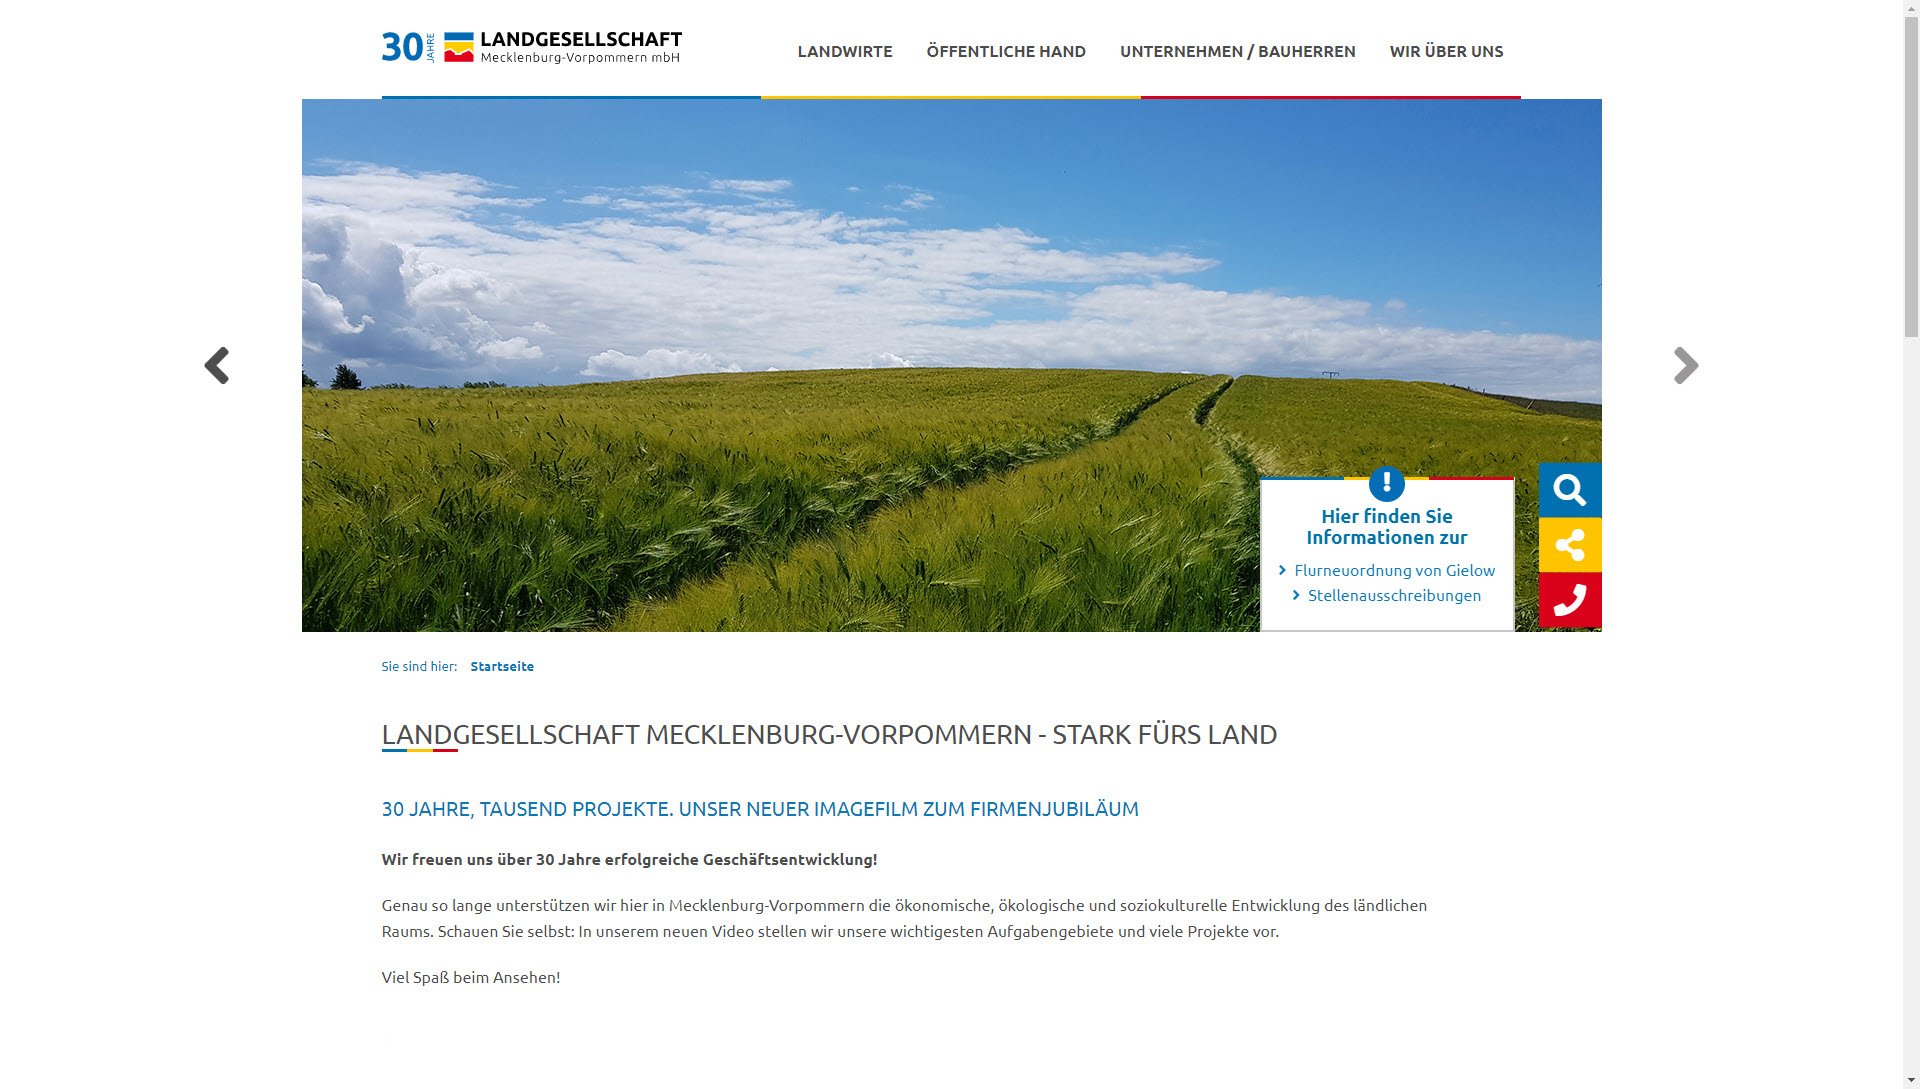 Landgesellschaft Mecklenburg-Vorpommern mbH